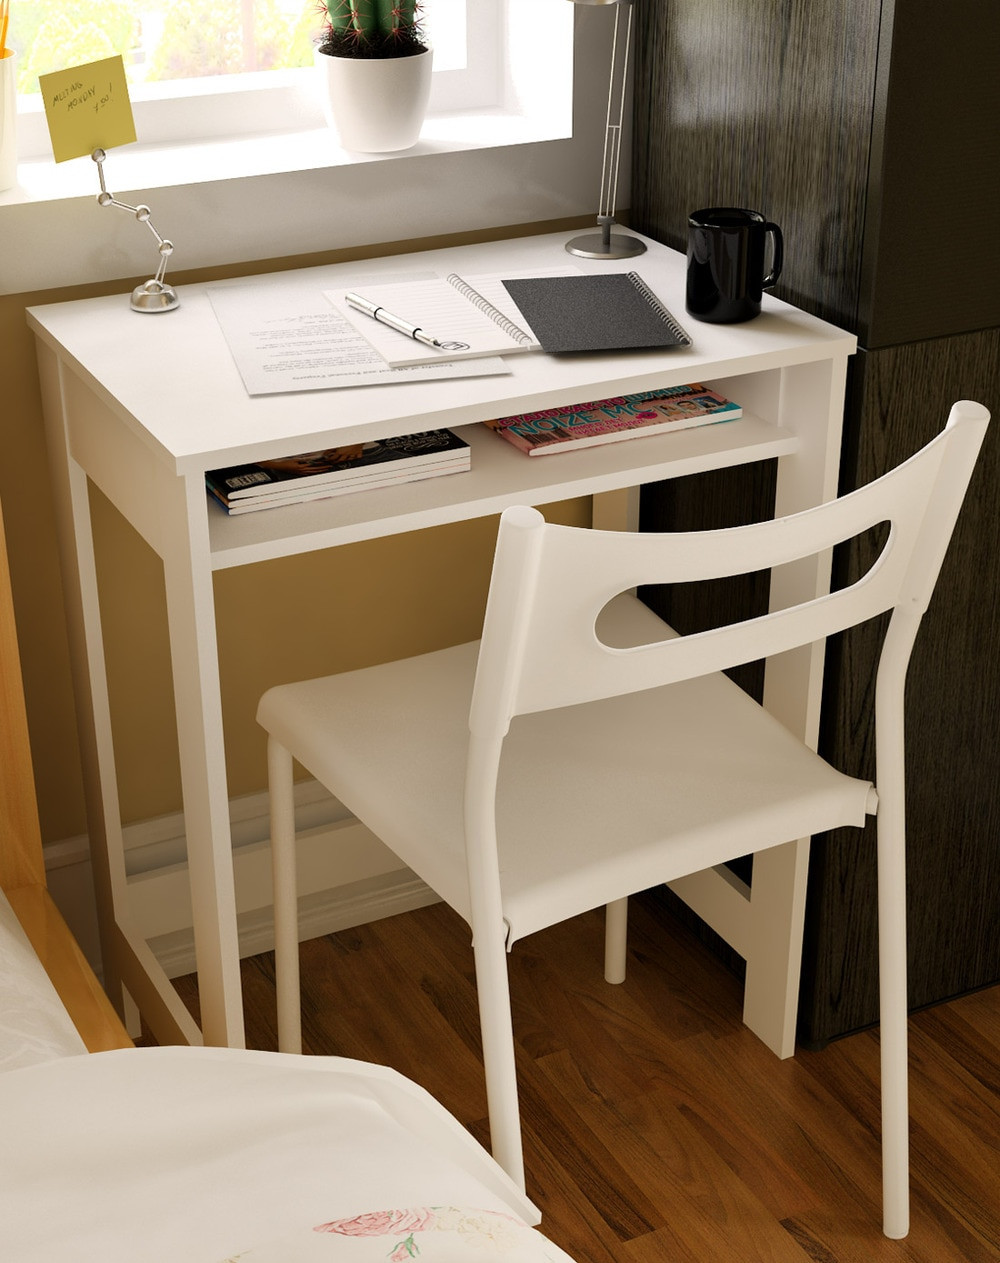 Study Table For Kids
 IKEA children s creative minimalist desk puter desk